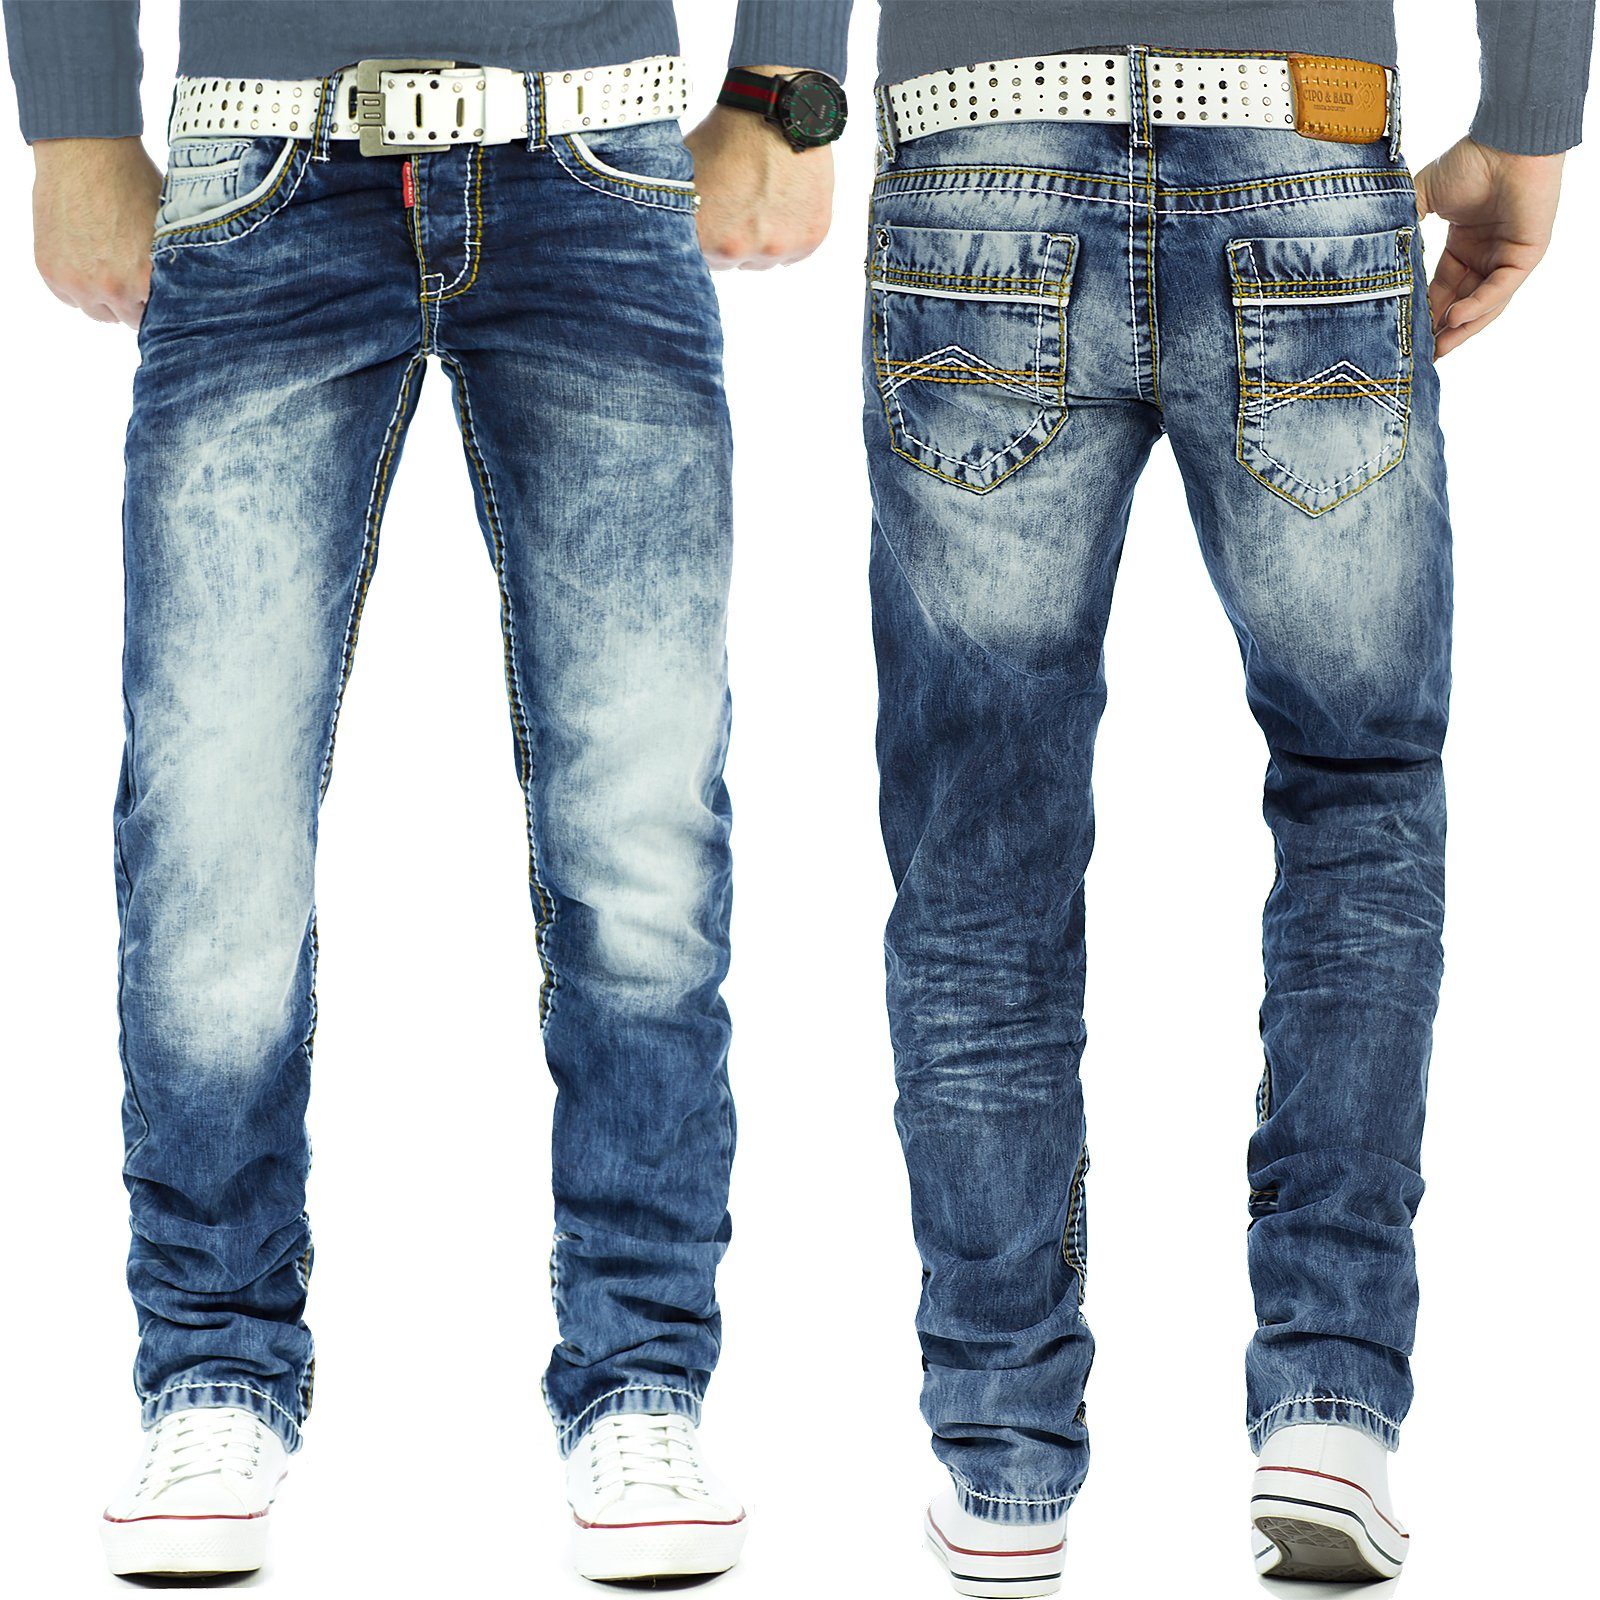 Herren Jeans Cipo & Baxx Regular-fit-Jeans BA-CD148 Regular Fit Jeans stonewashed Casual Look mit dicken Nähten